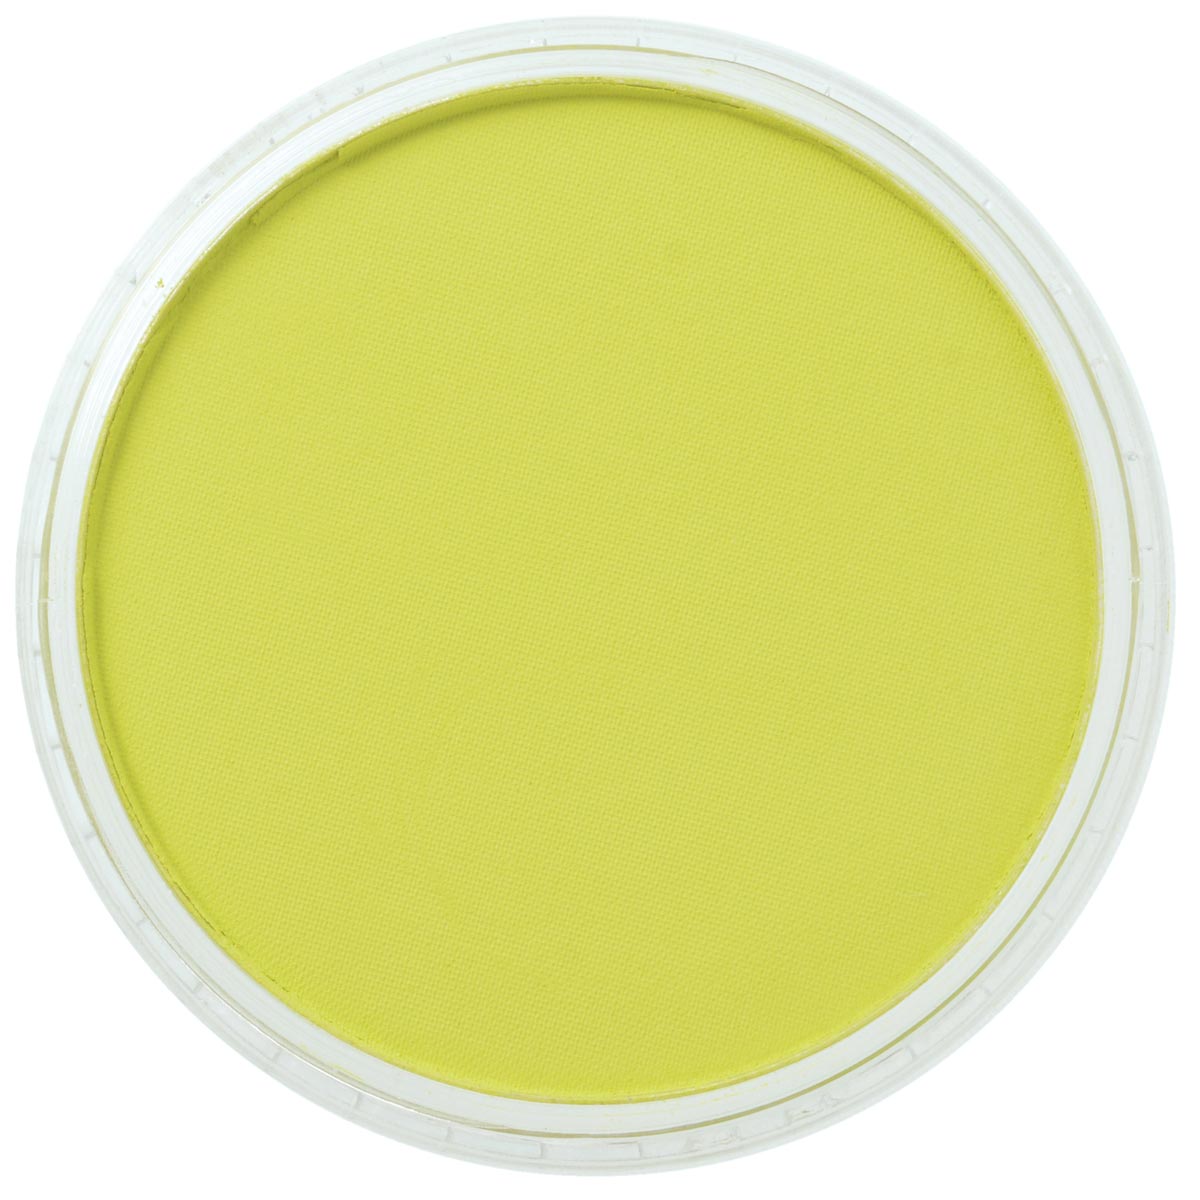 Pan Pastel Bright Yellow Green 680.5